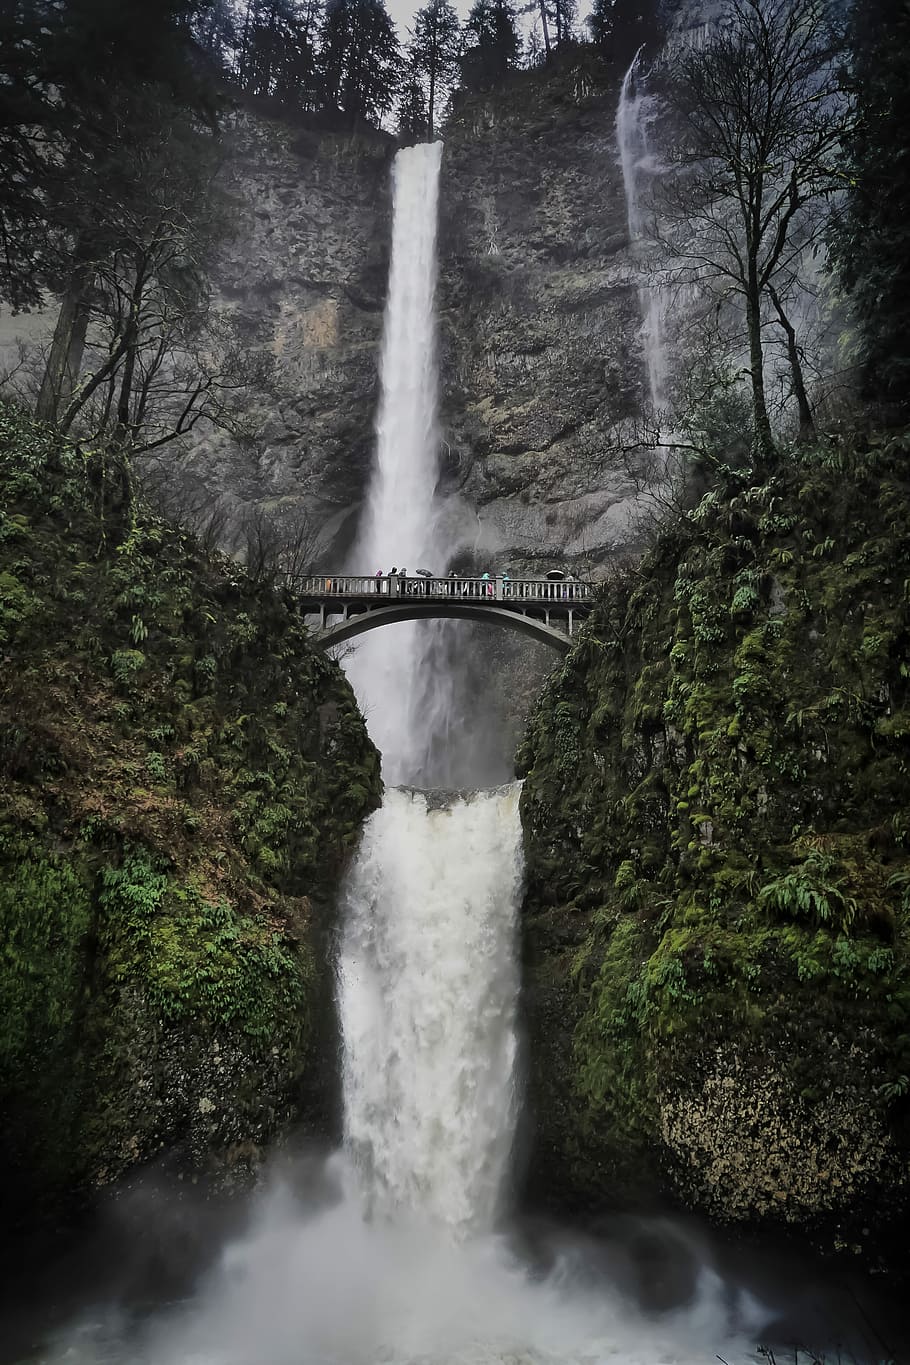 waterfalls in mountain, people passing on grey arch bridge near waterfall